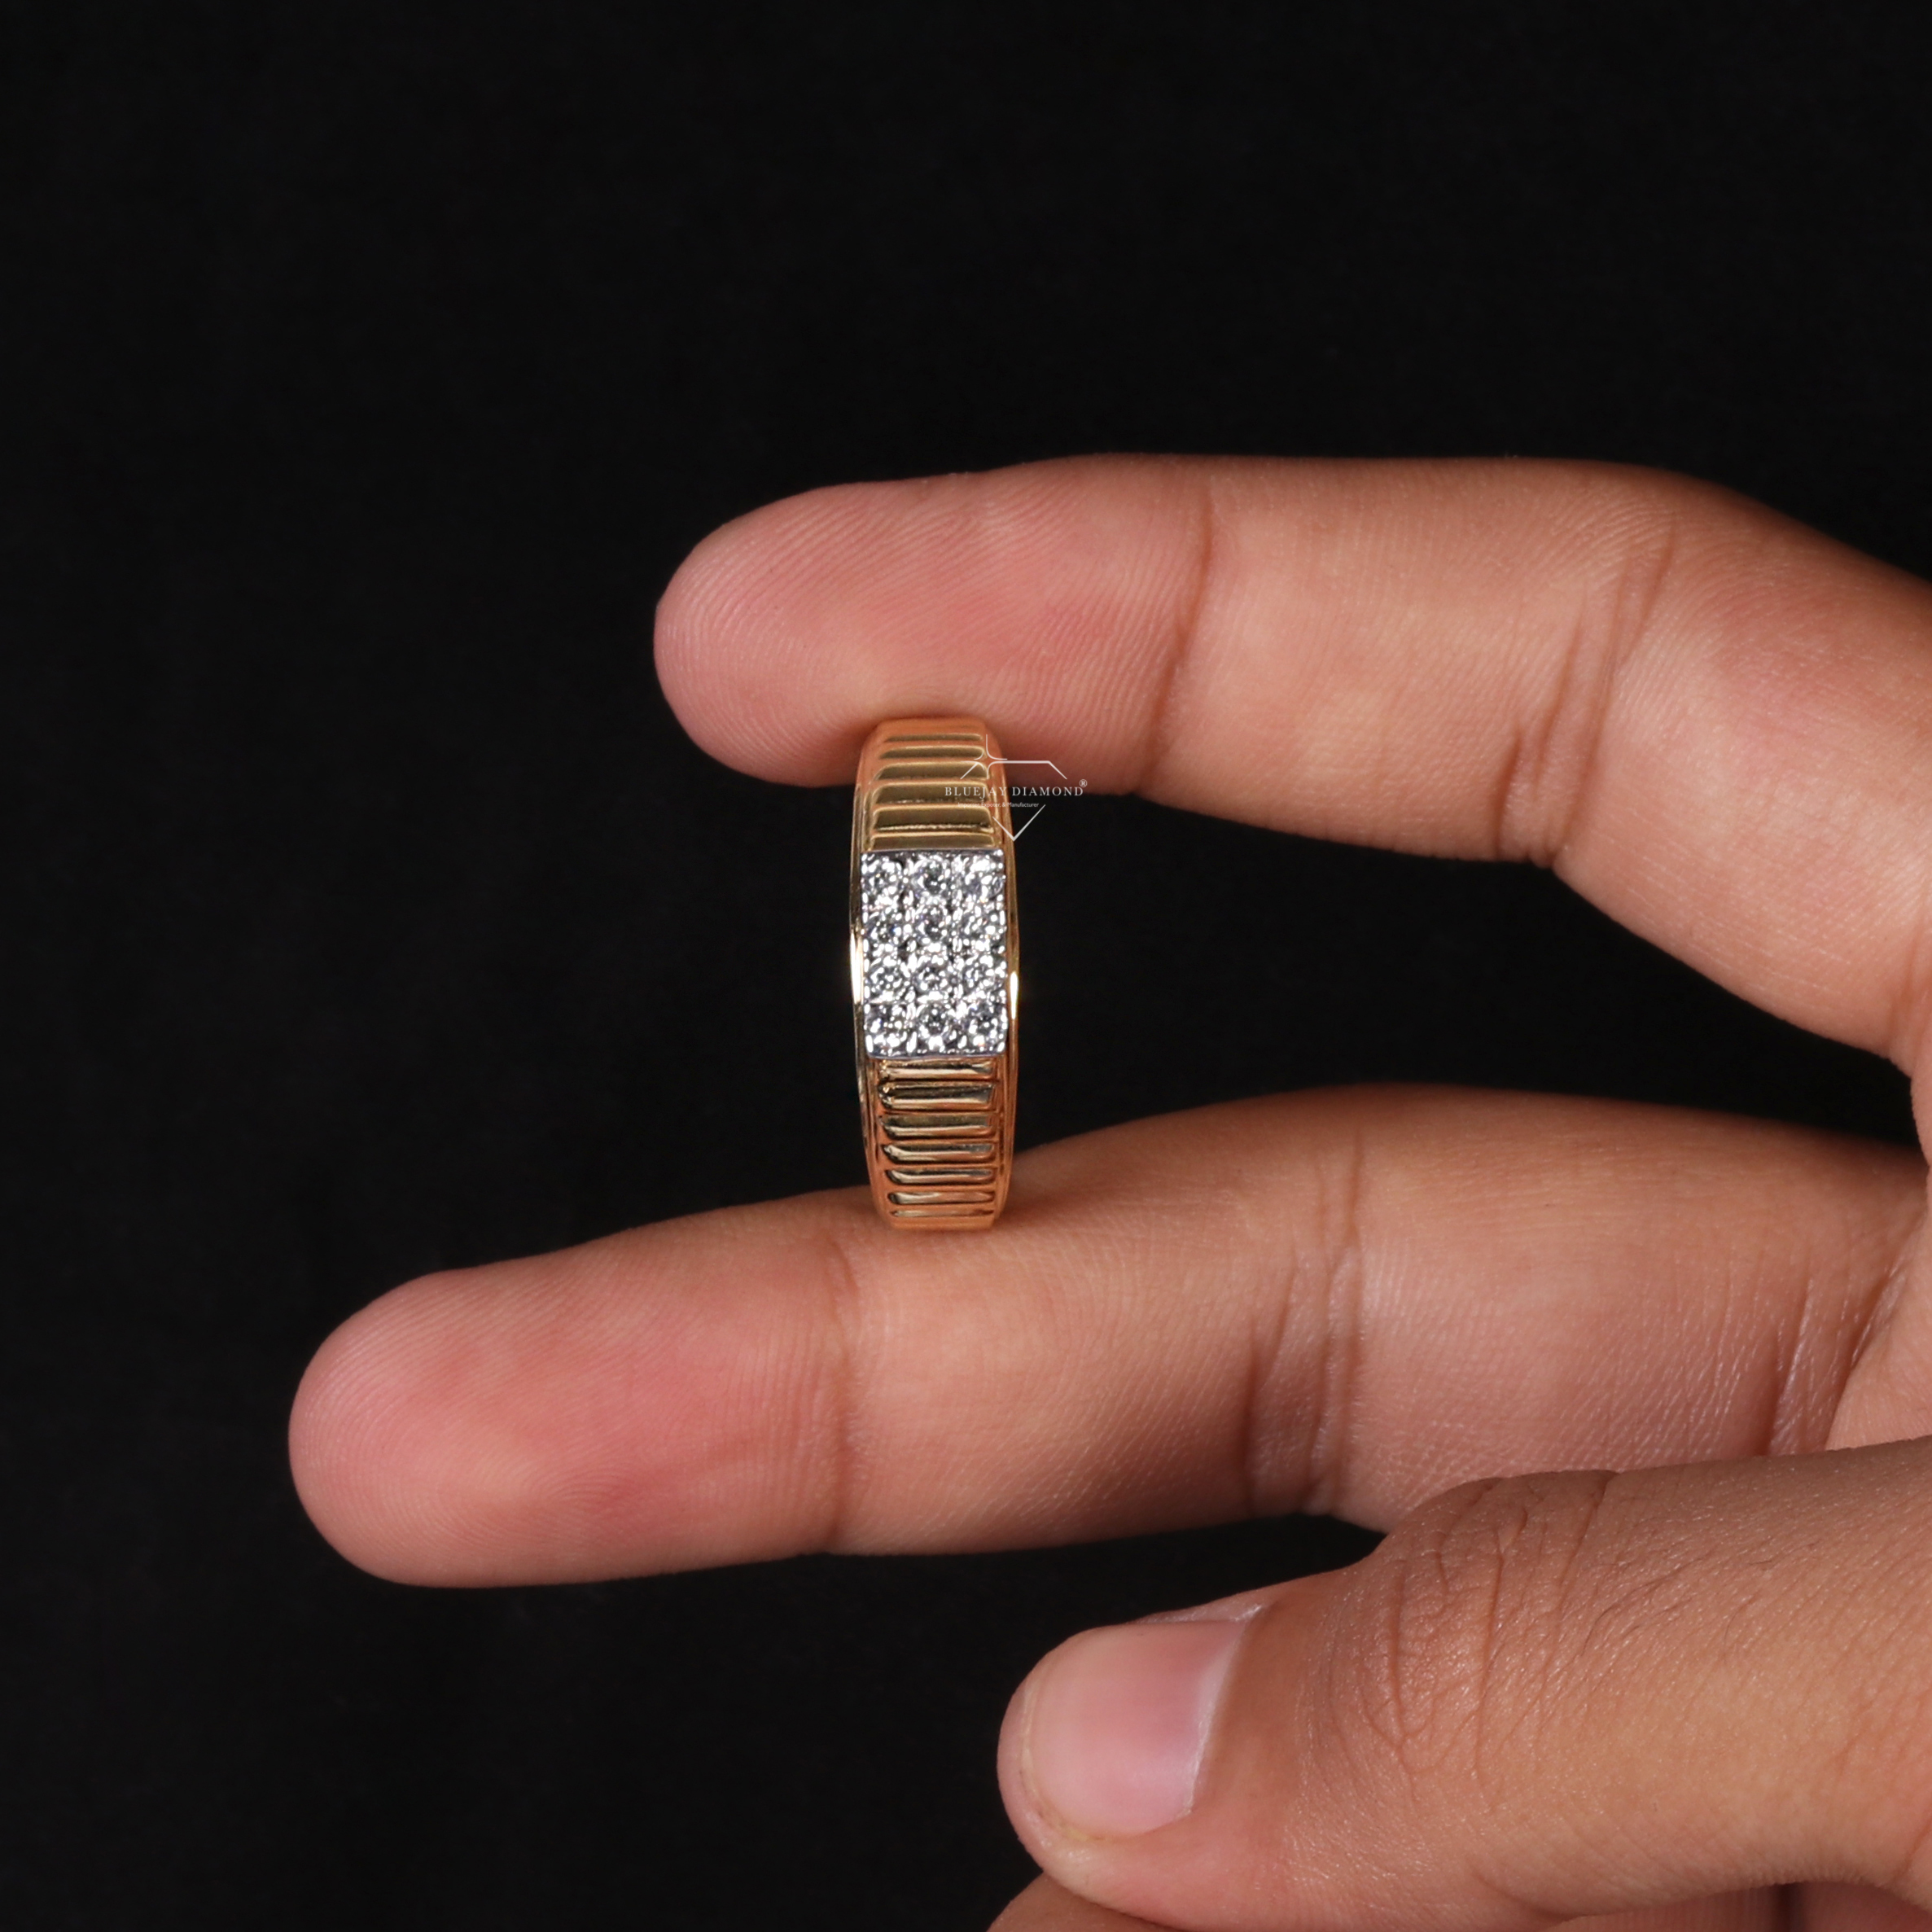 4.85 Ct Round Brilliant Cut Off White Diamond Solitaire Ring, Great  Brilliance & Luster! Ideal For Birthday Gift, Certified Diamond! |  ZeeDiamonds